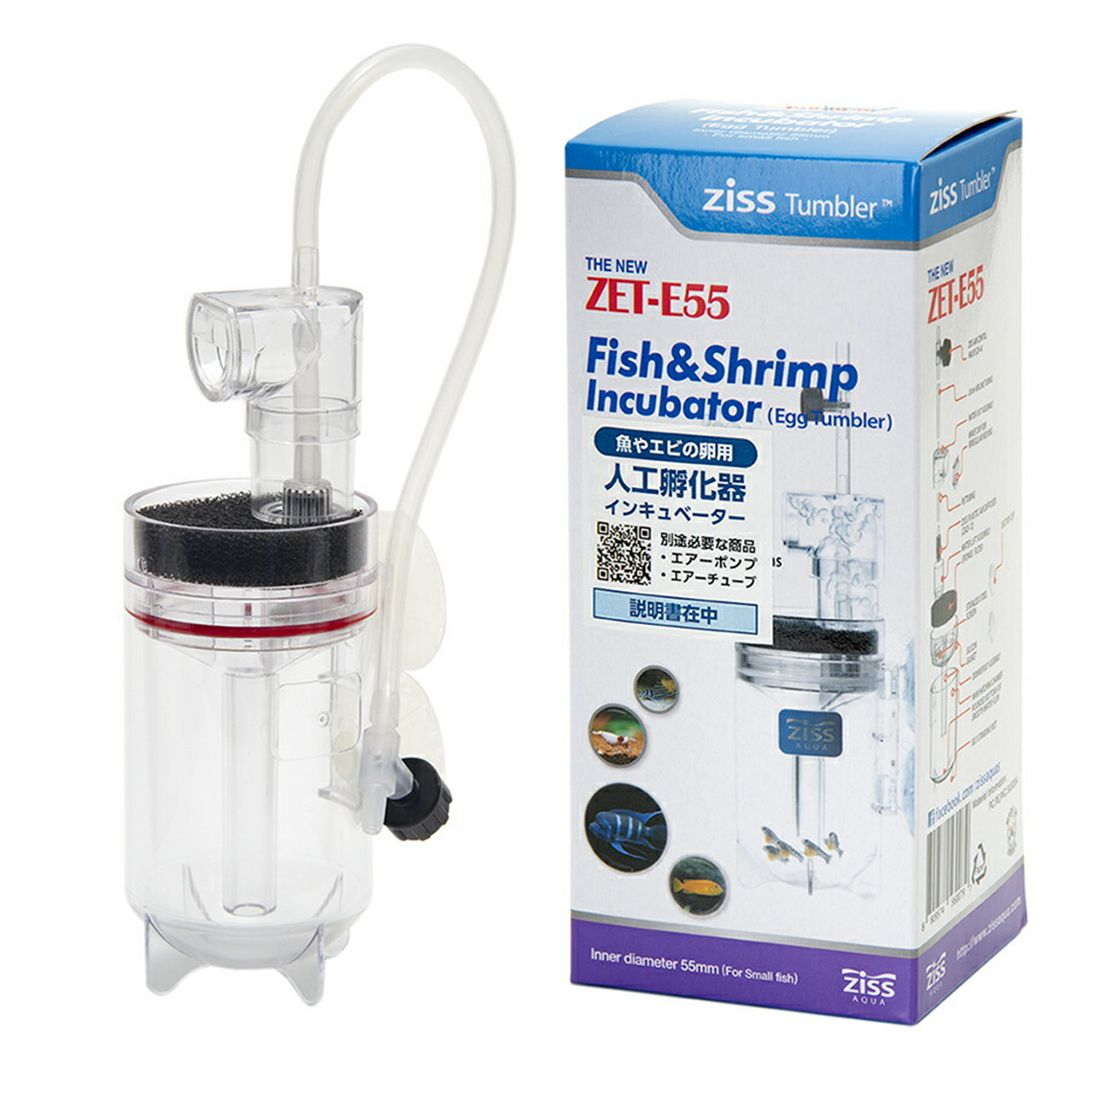 Fish and shrimp incubator ZET-E55